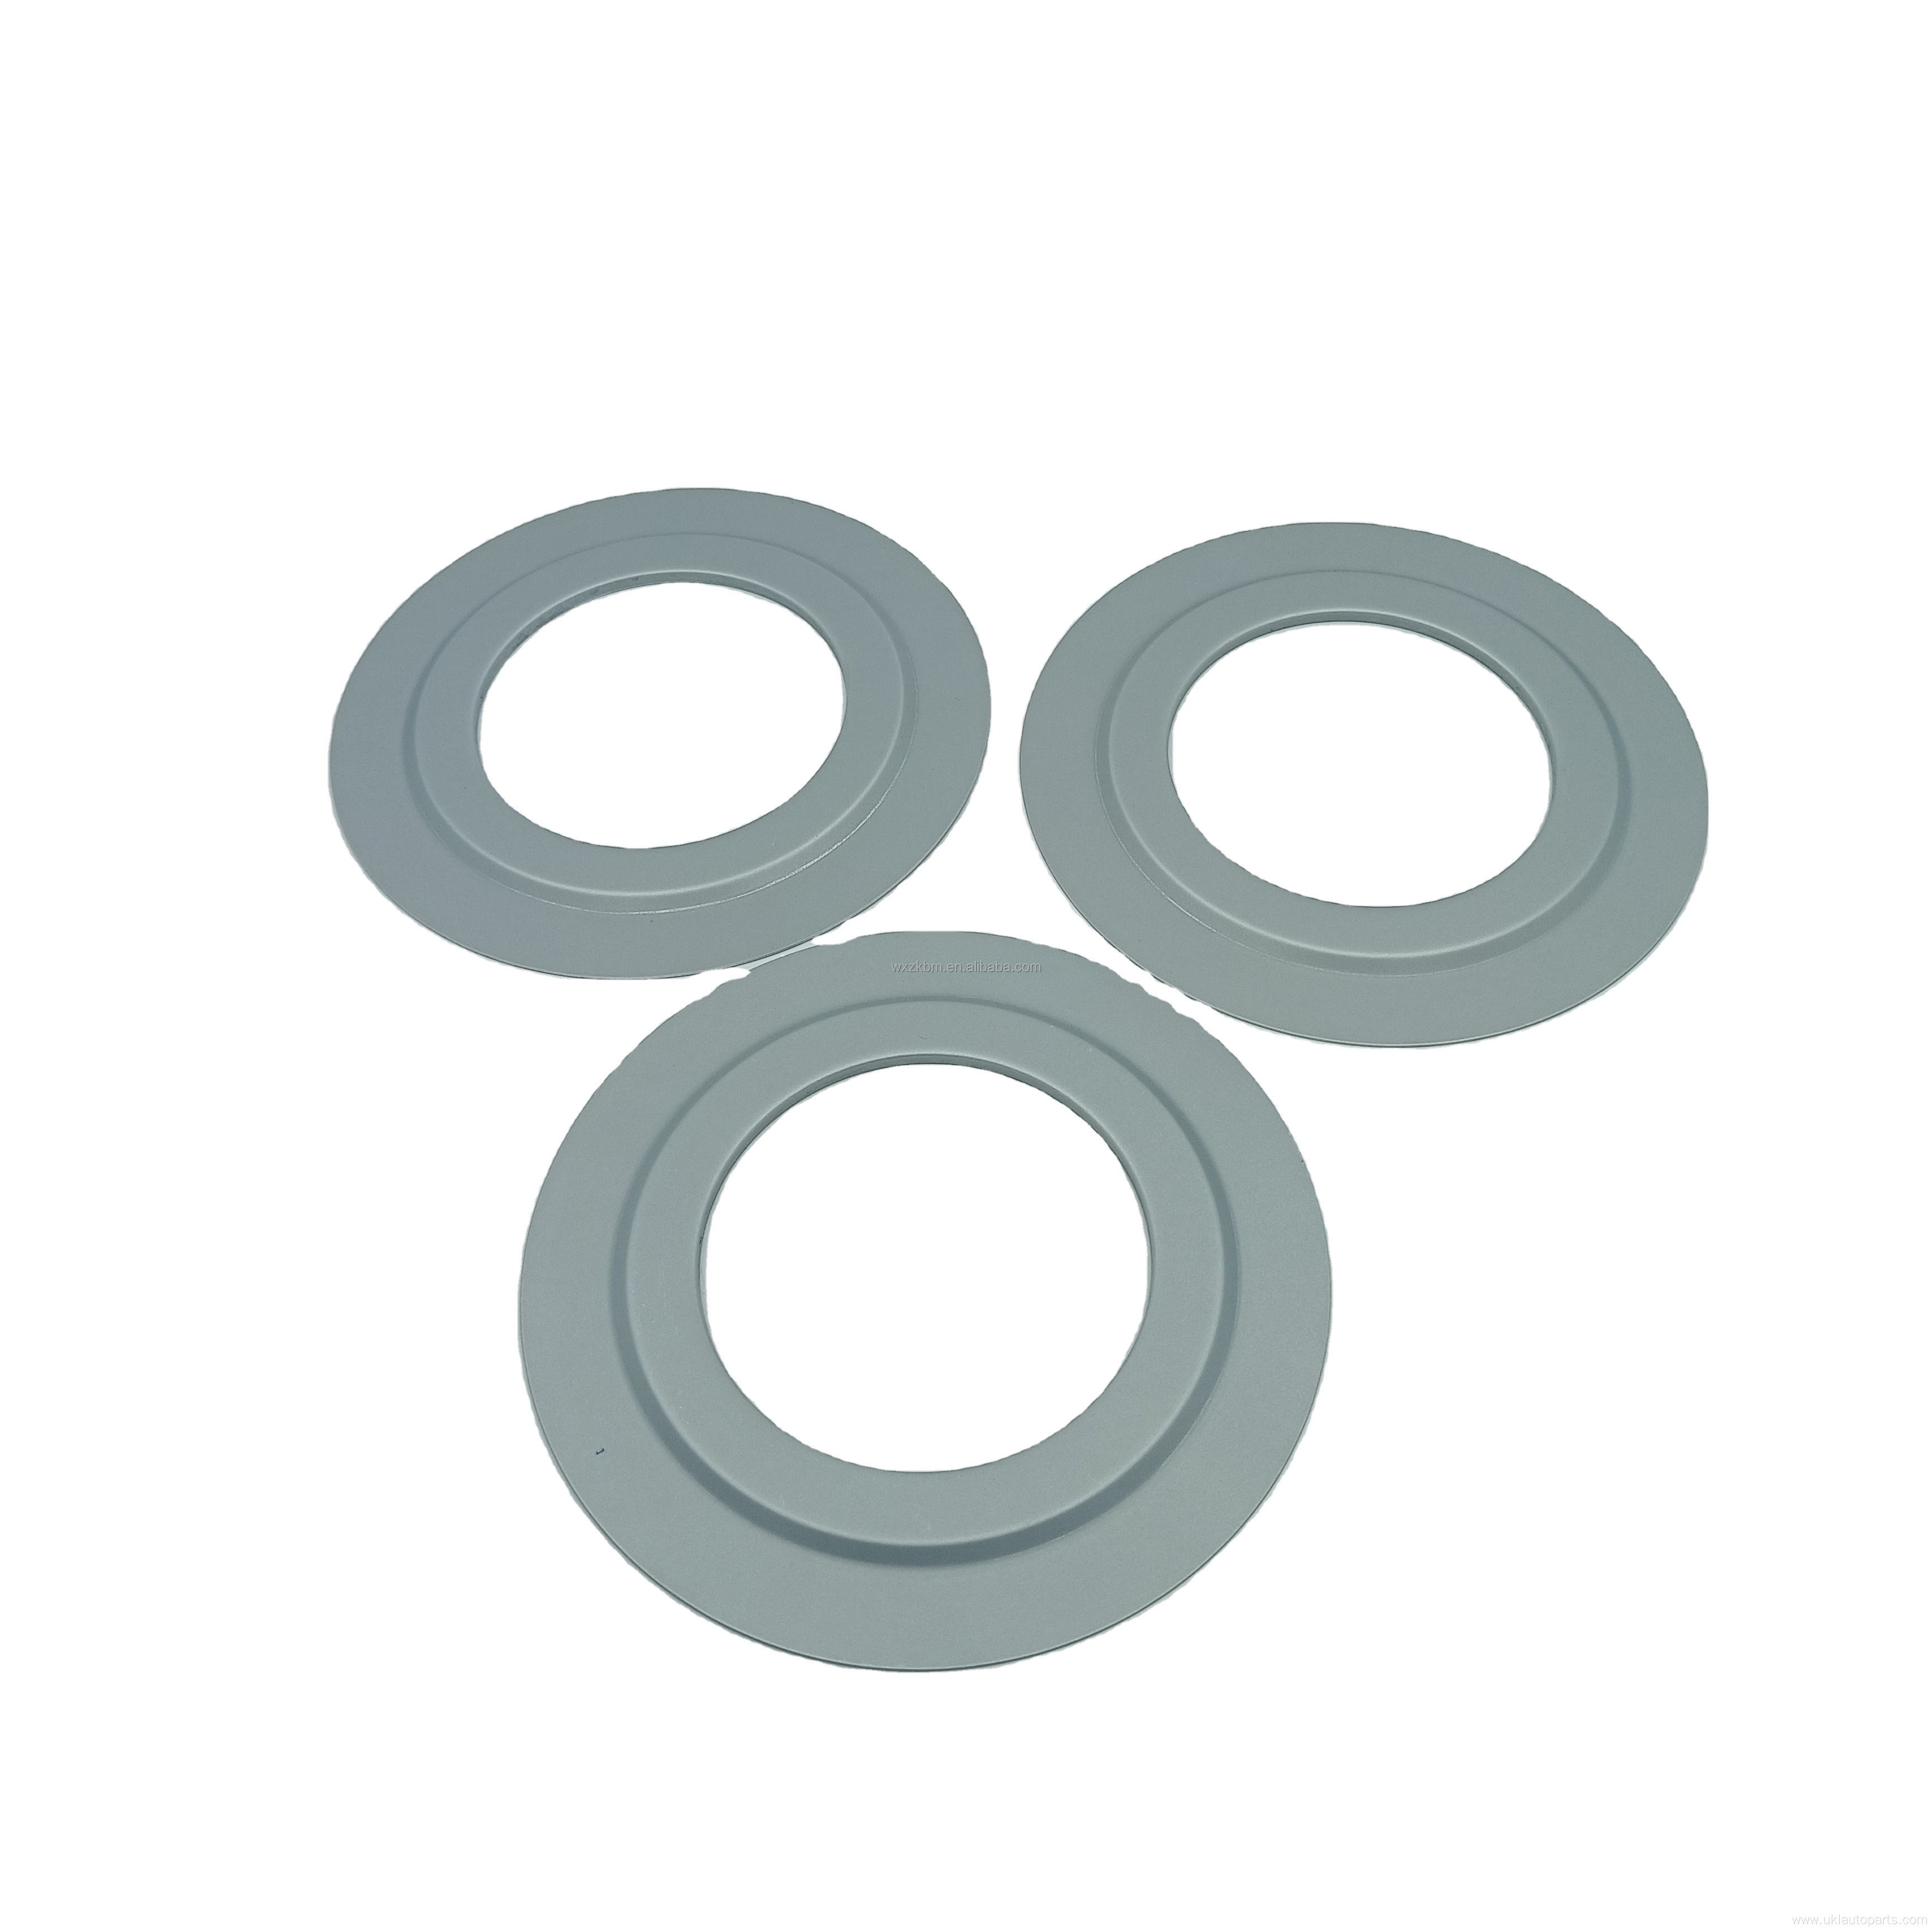 NILOS-Spacer-Ring A55 A60 A65 A70 metal seal